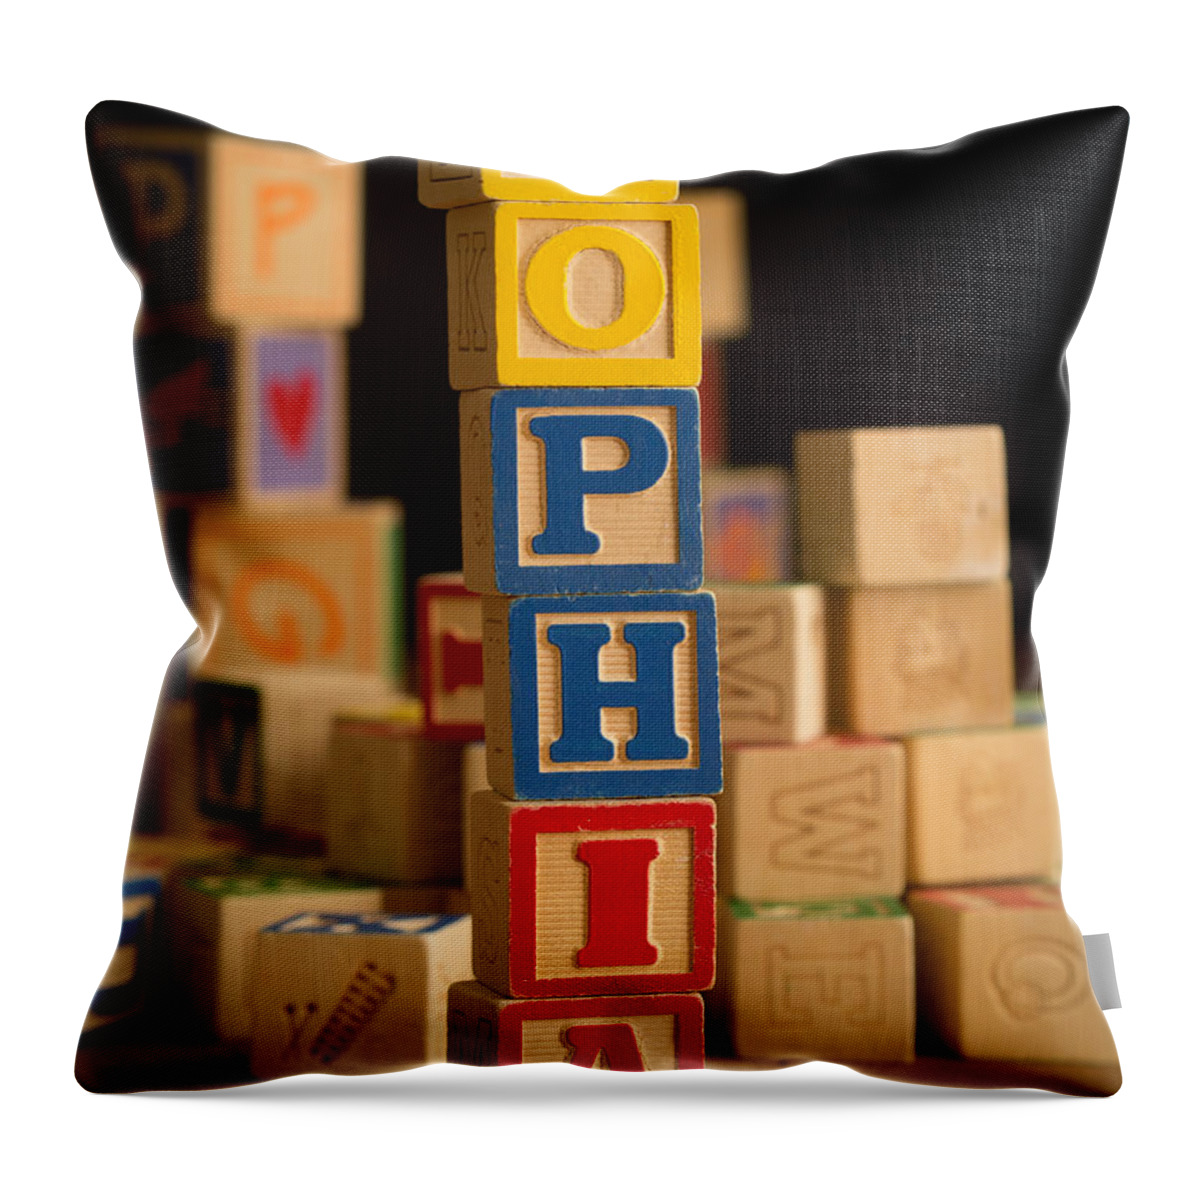 Alphabet Throw Pillow featuring the photograph SOPHIA - Alphabet Blocks by Edward Fielding